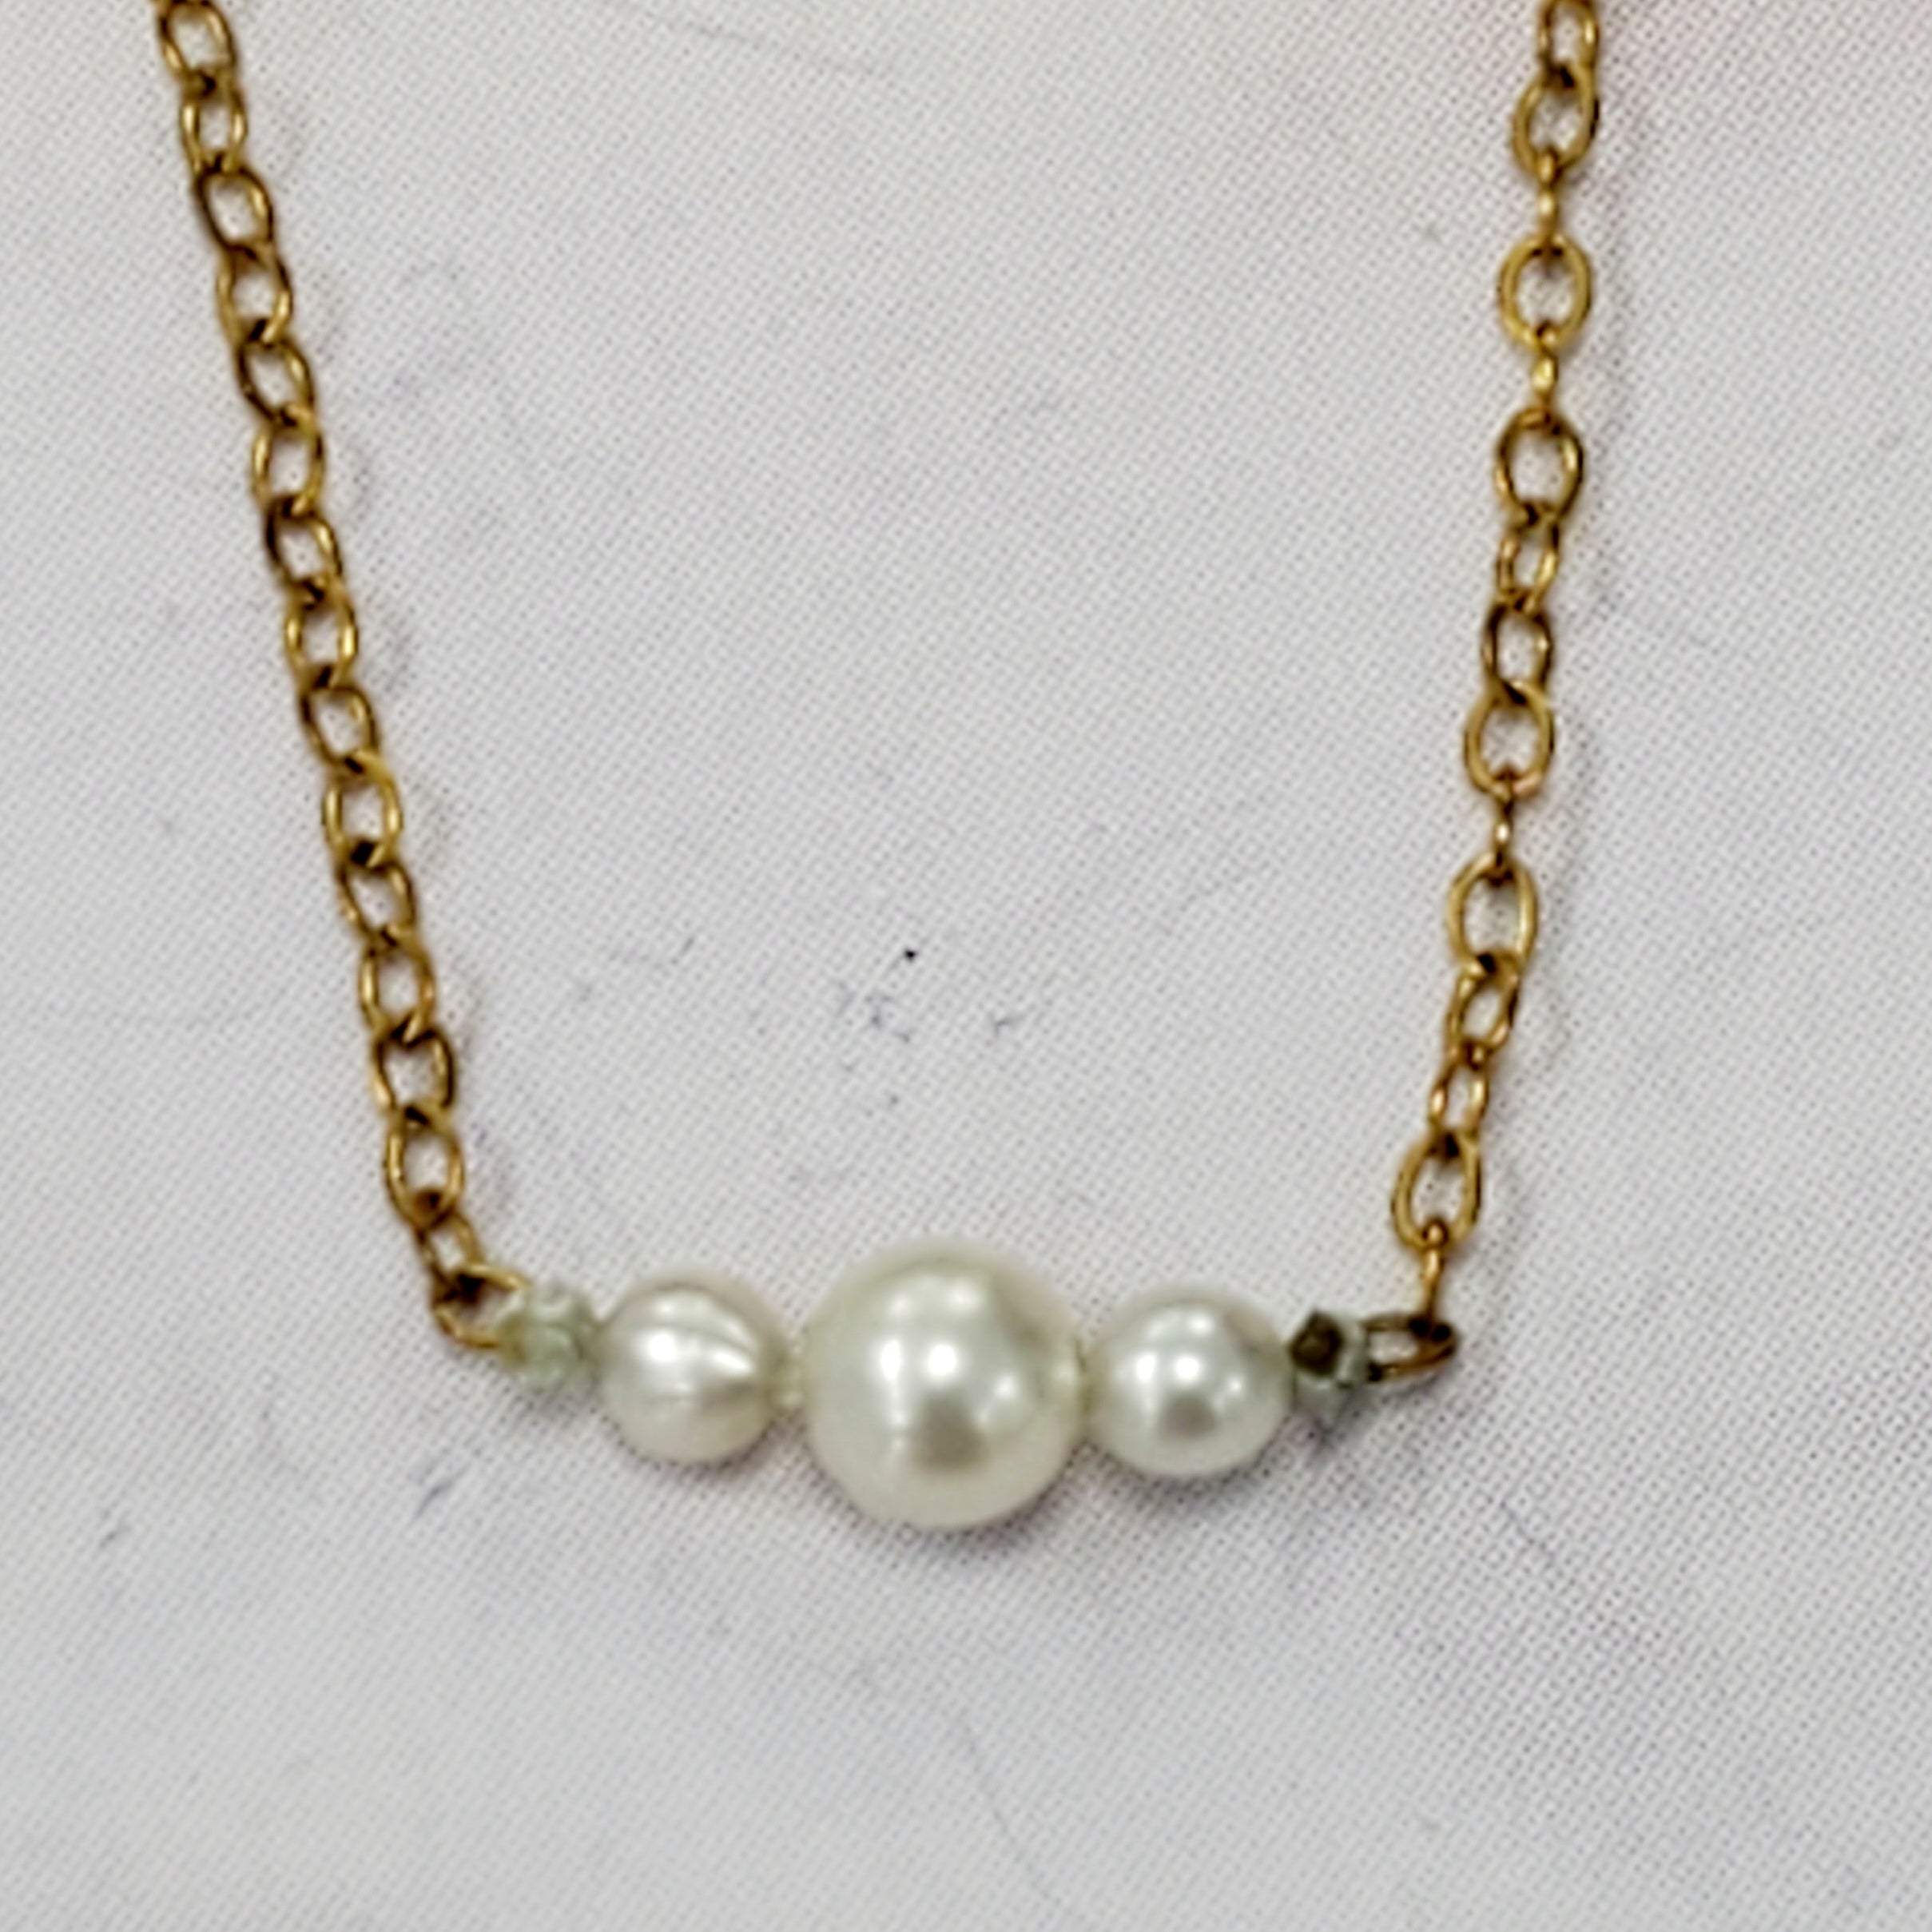 Buy Vintage Estate Cascade Floating Genuine Pearl Necklace Online in India  - Etsy